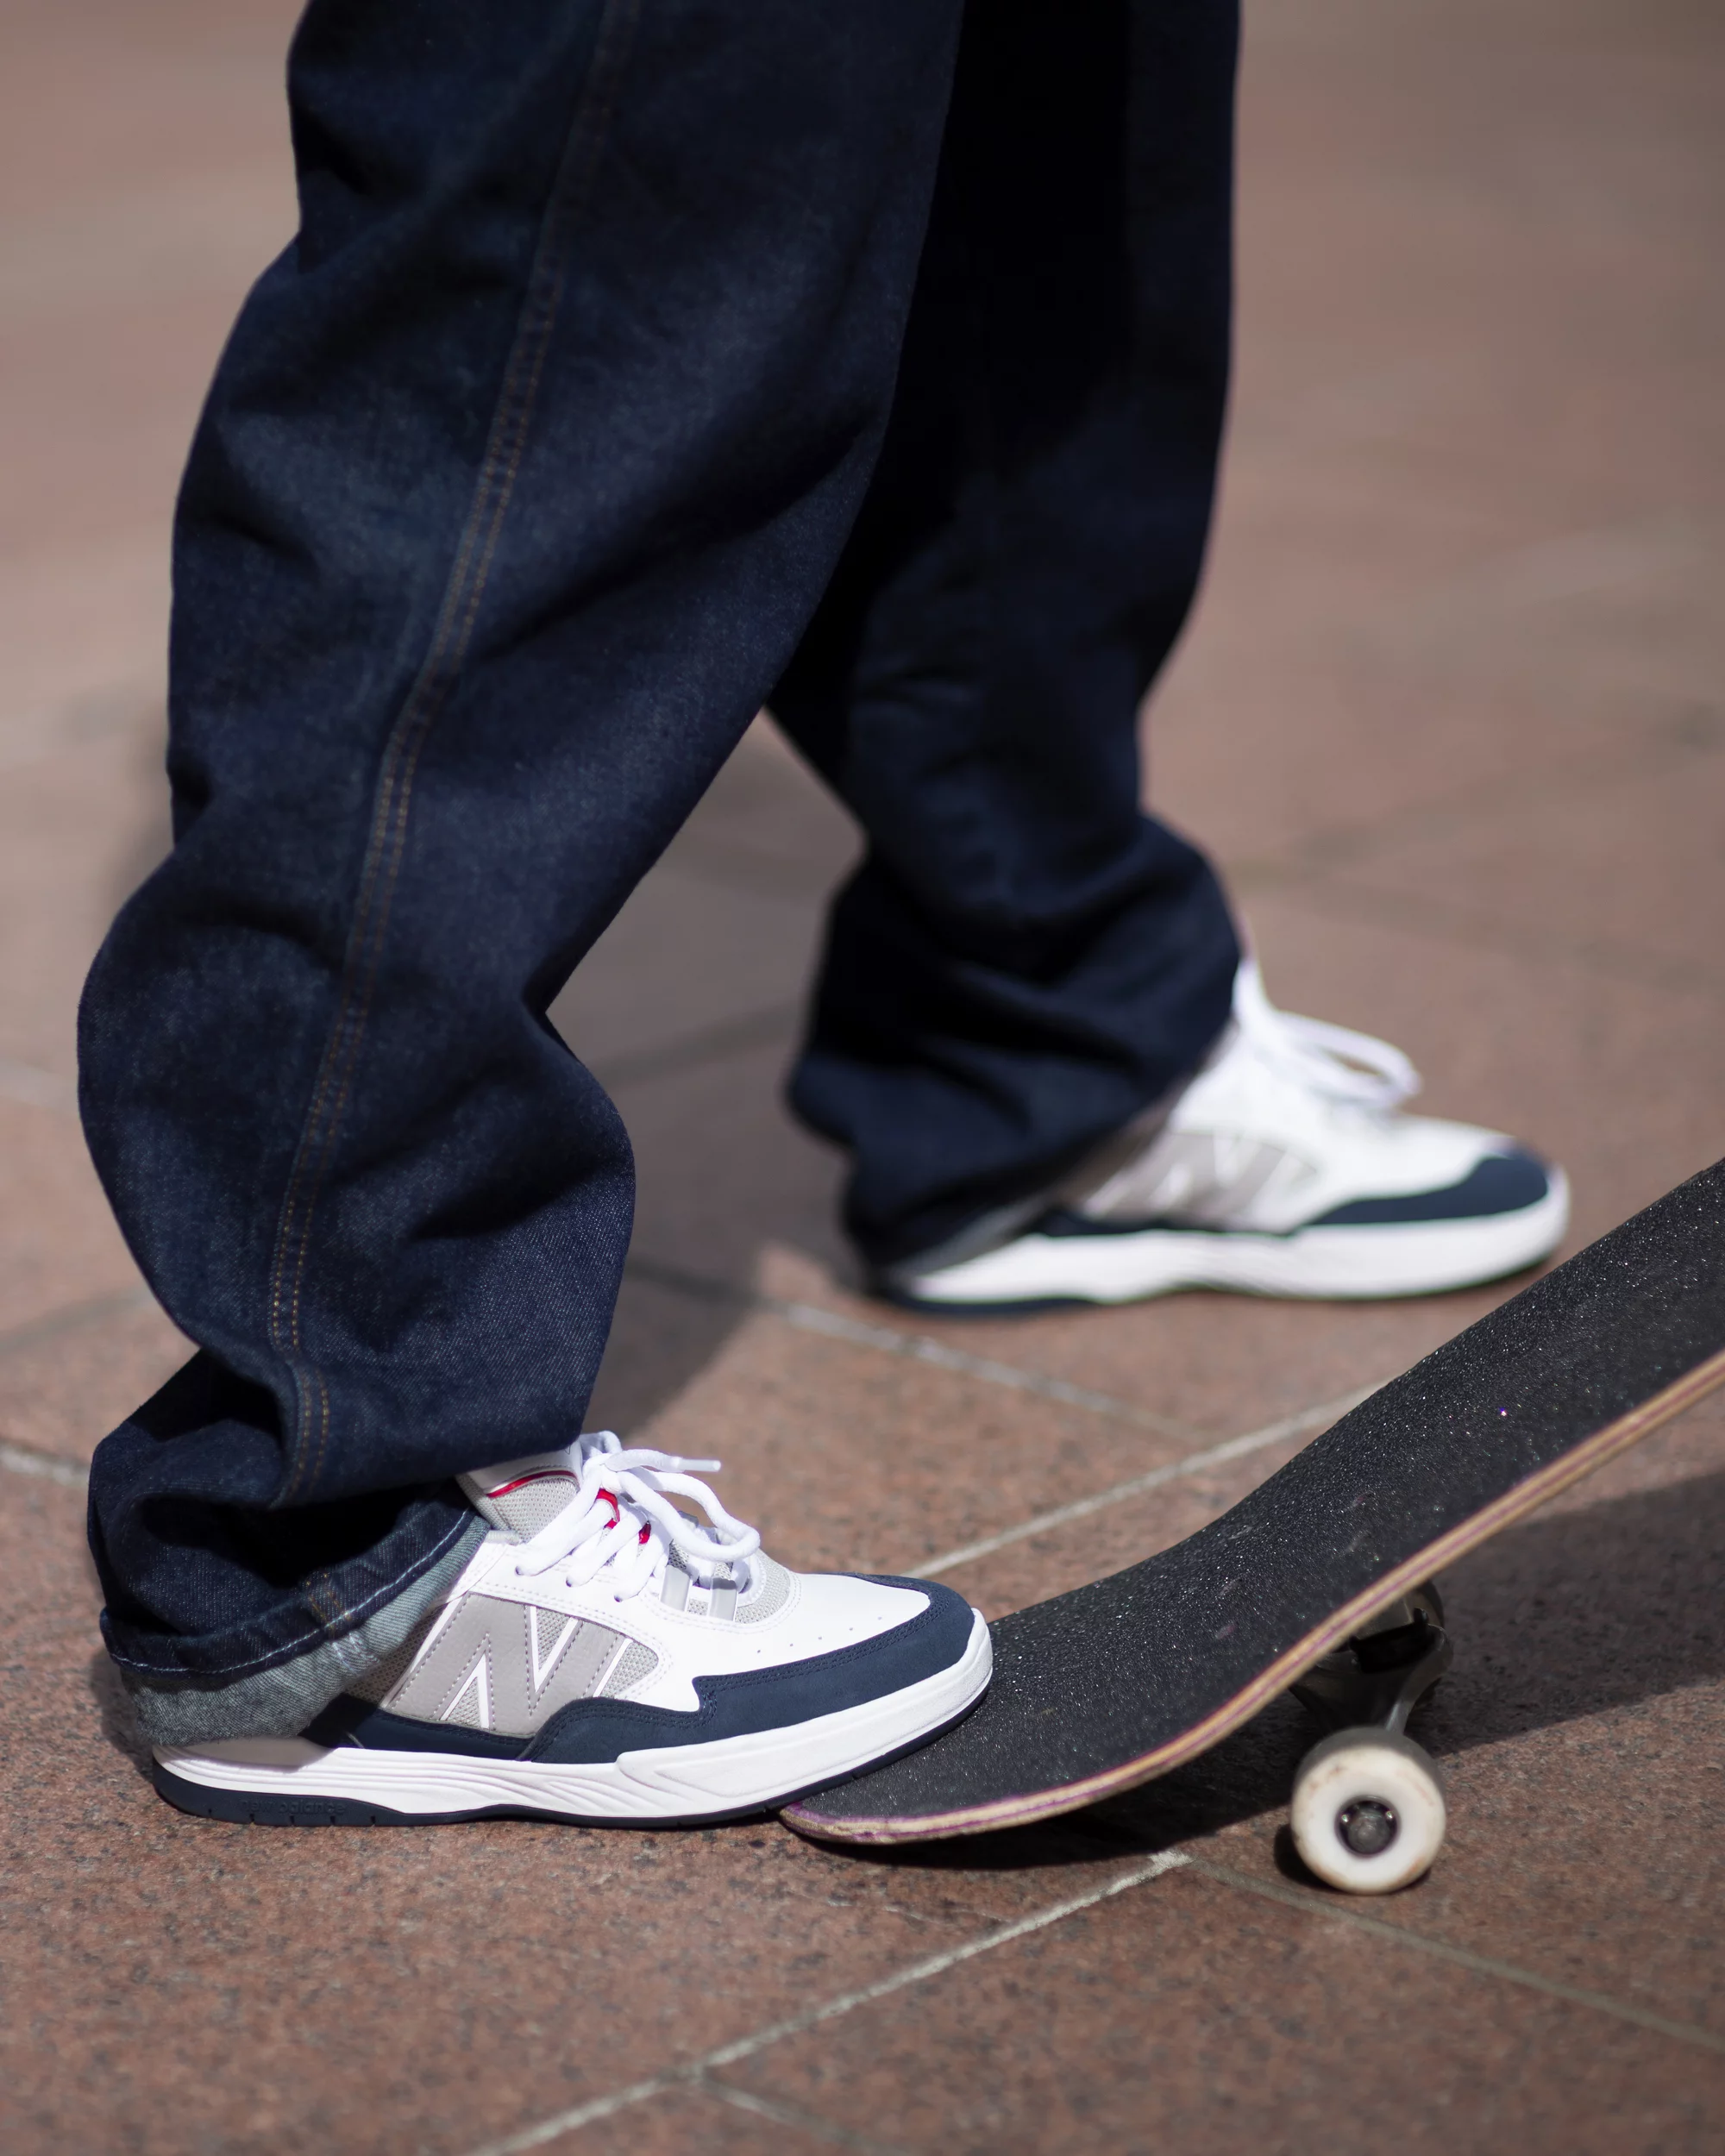 New Balance 808 Tiago Lemos Skate Shoes - white/navy - Free Shipping | Tactics